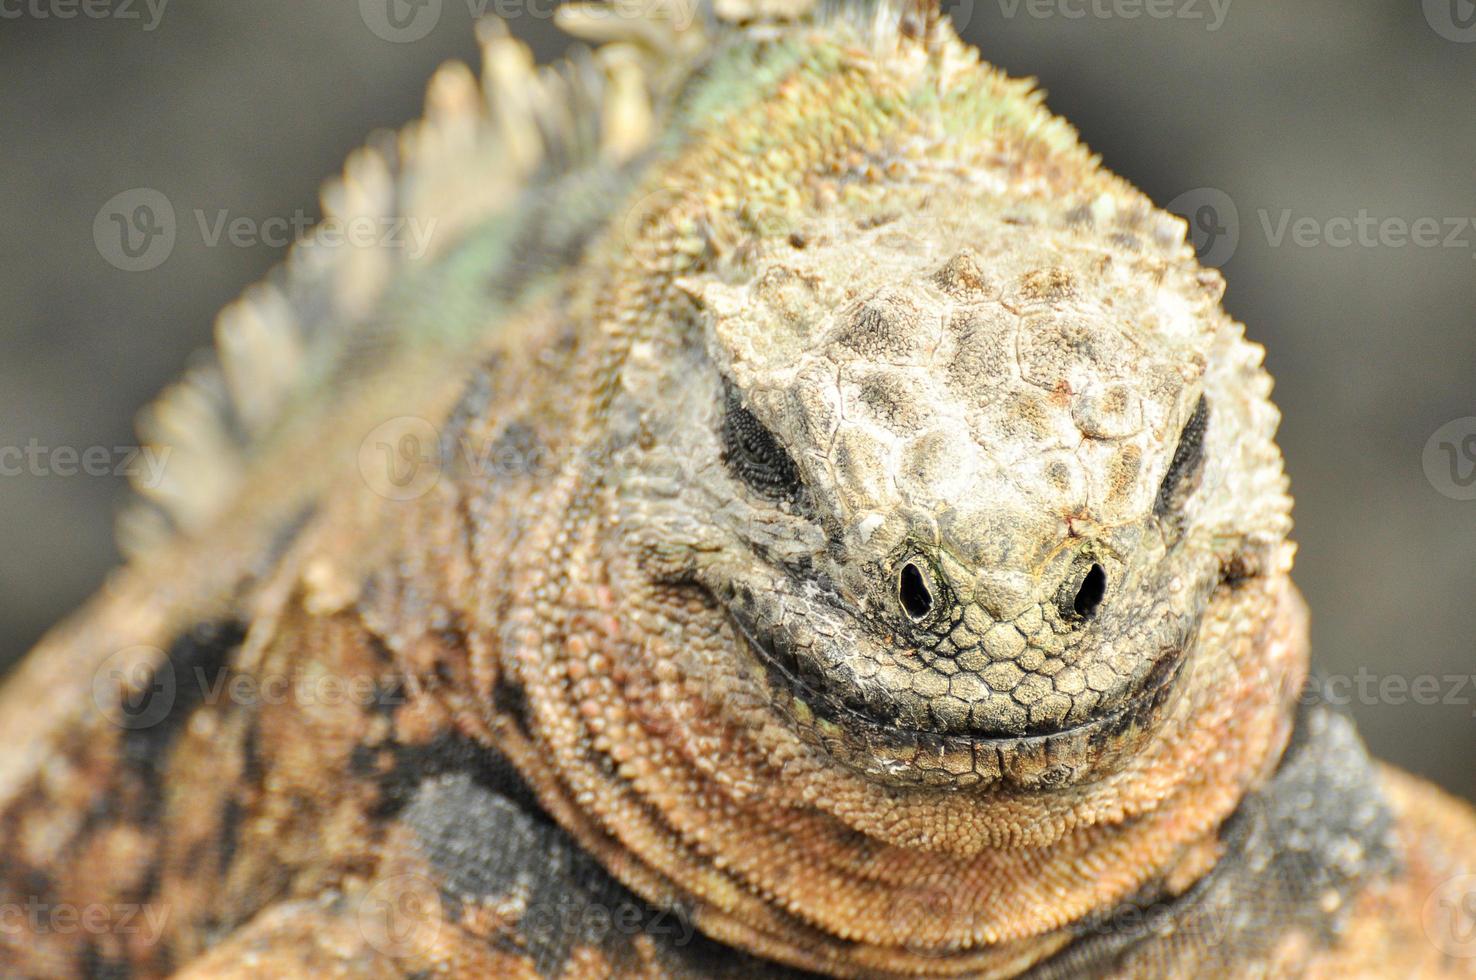 Smiling Iguana, Galapagos, Ecuador photo